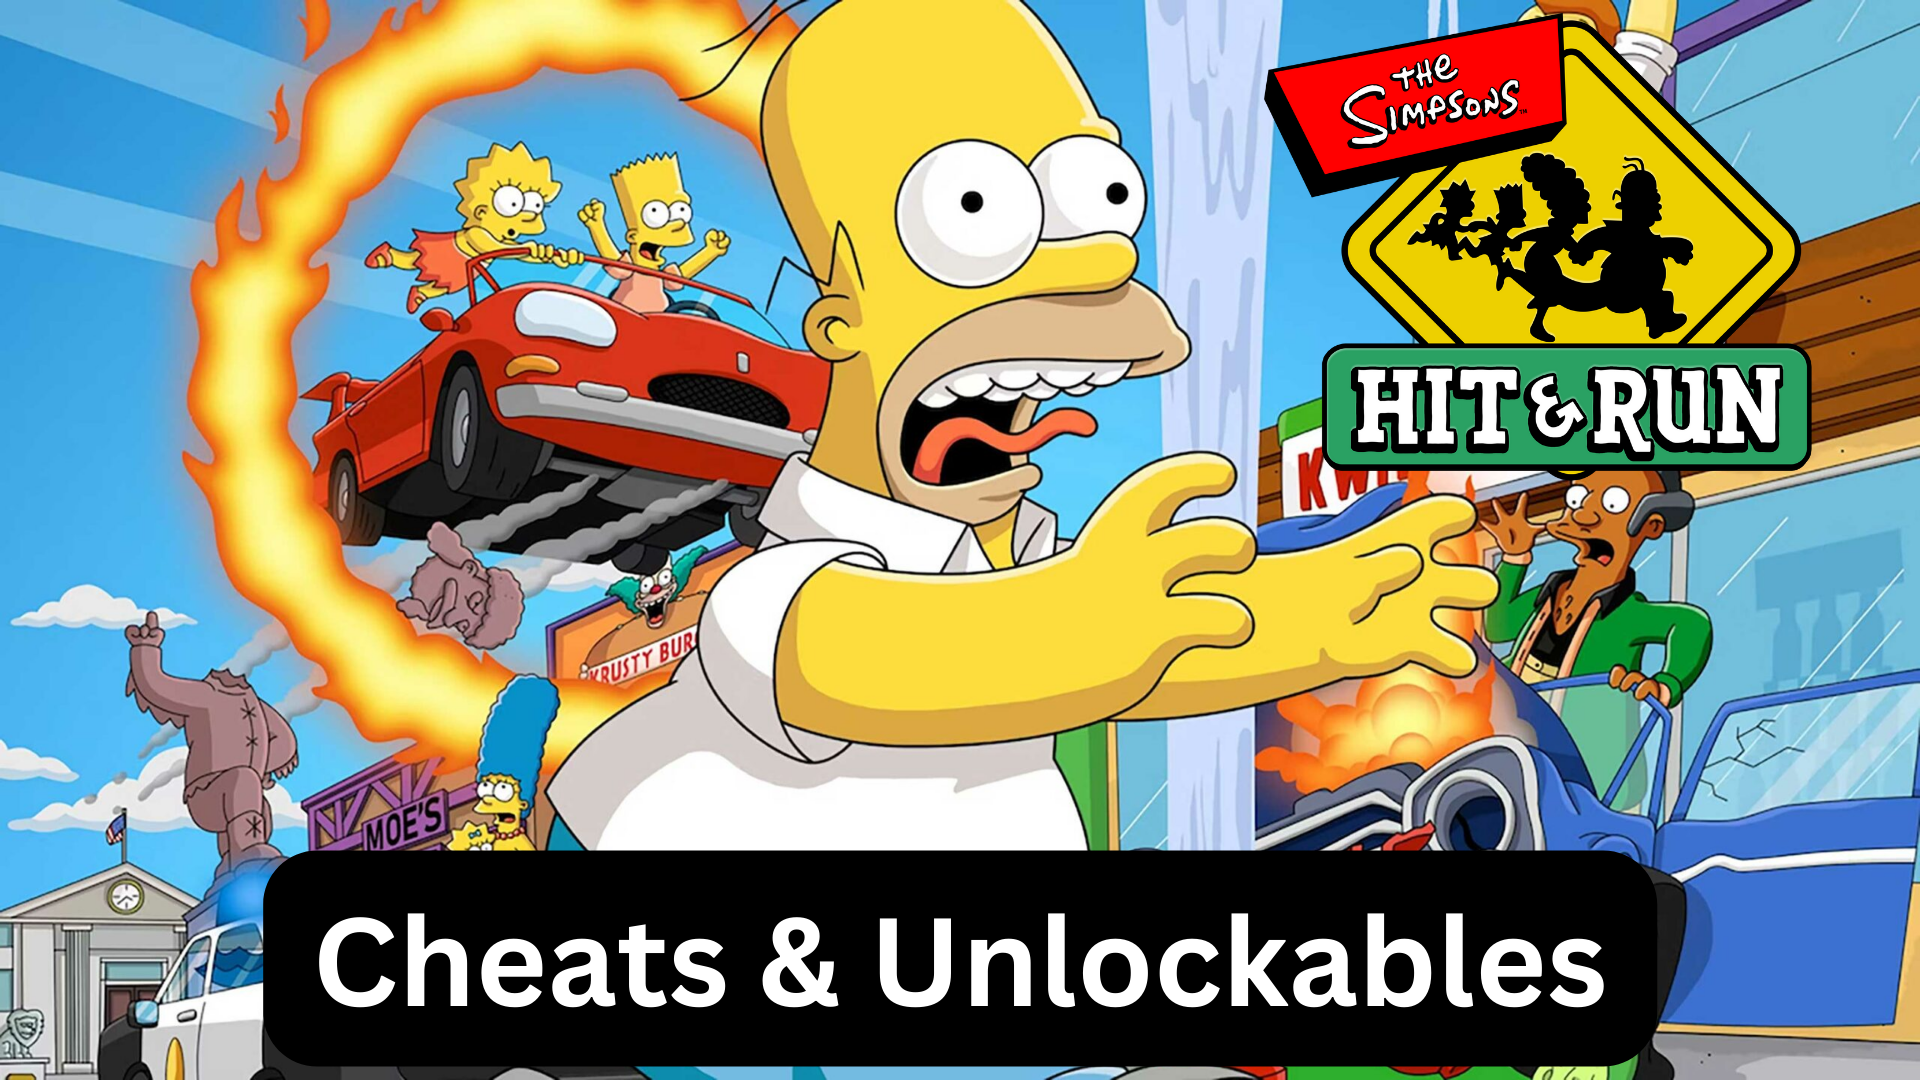 the simpsons: hit & run cheats and unlockables